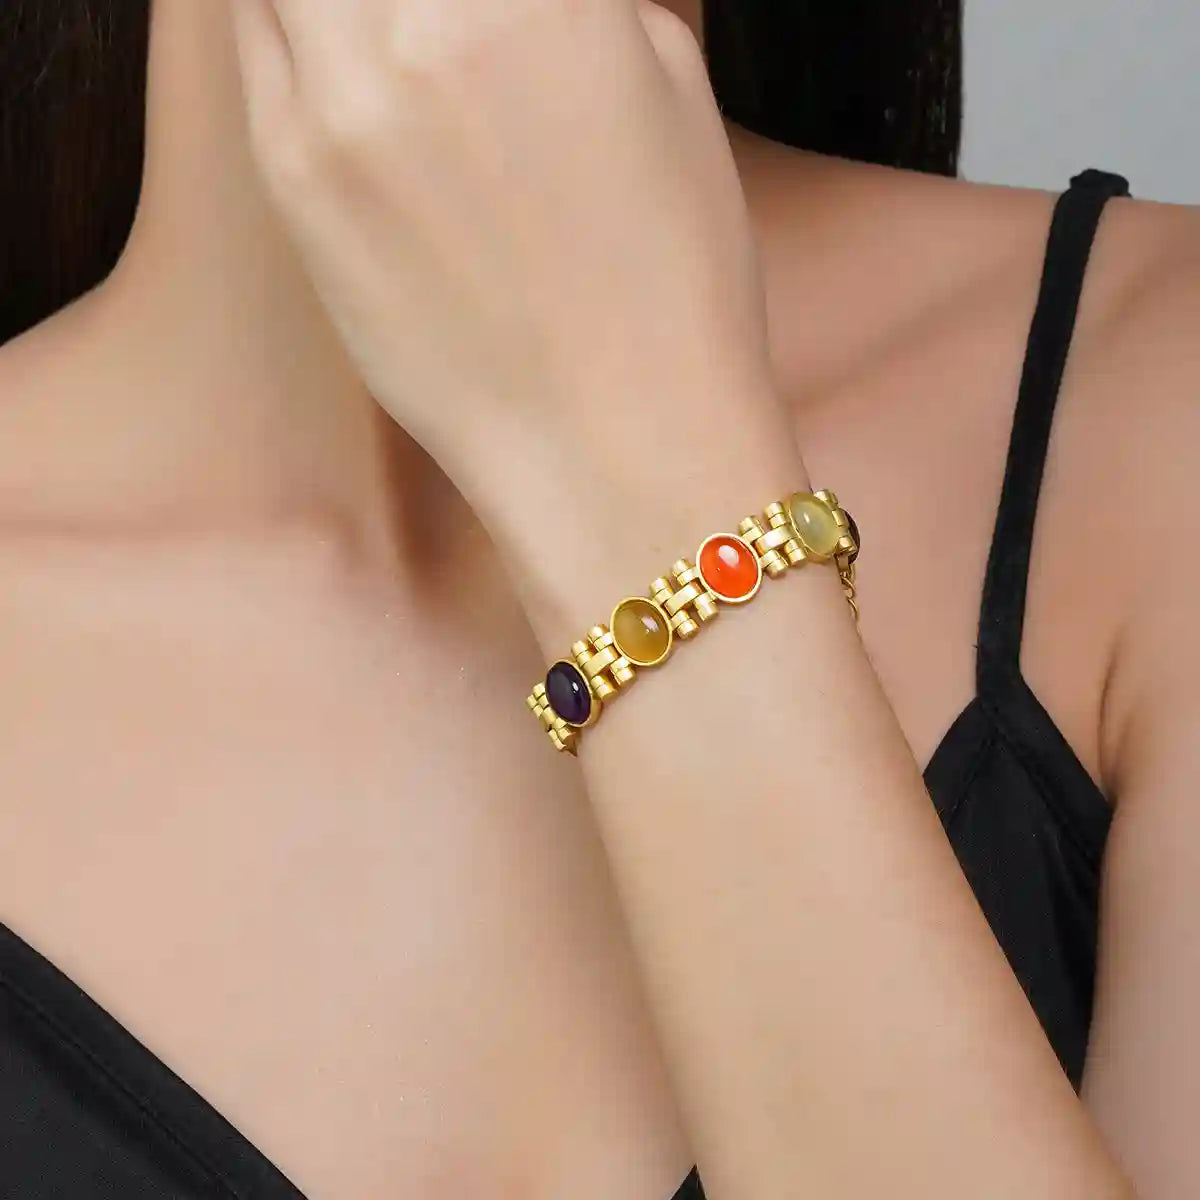 Tumbled Gemstone Bracelets: BUY 3 GET 1 FREE! (Stretch Crystal Nugget  Bracelets) | eBay